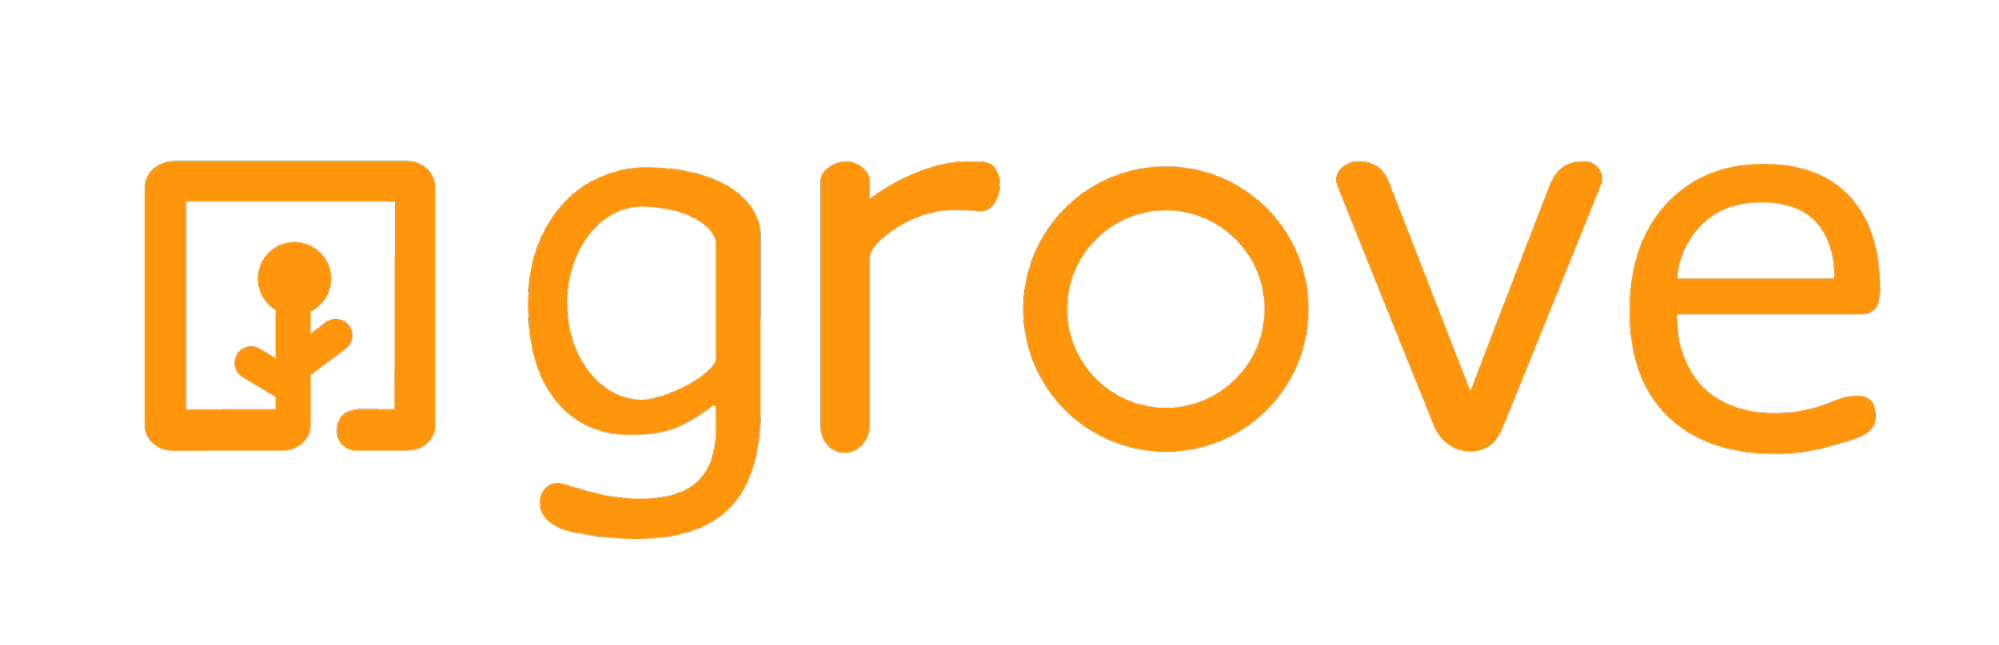 Grove Logo - Grove | Customer